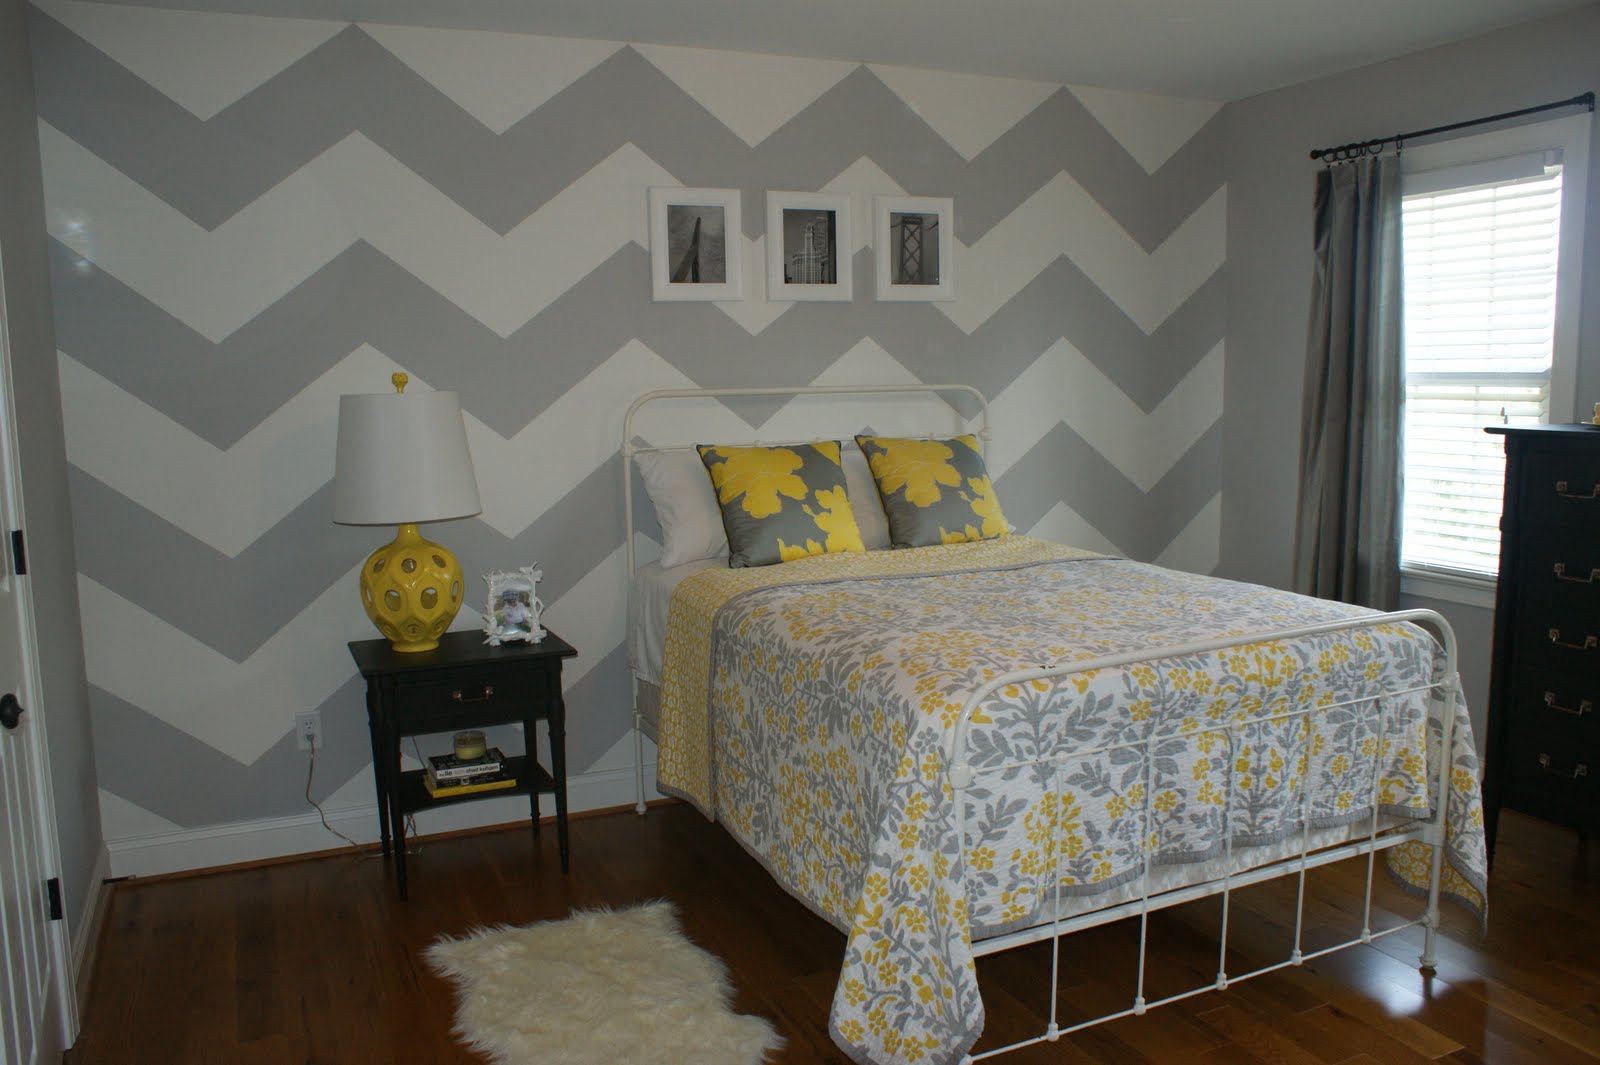 Olivia Grayson gray and white chevron walls